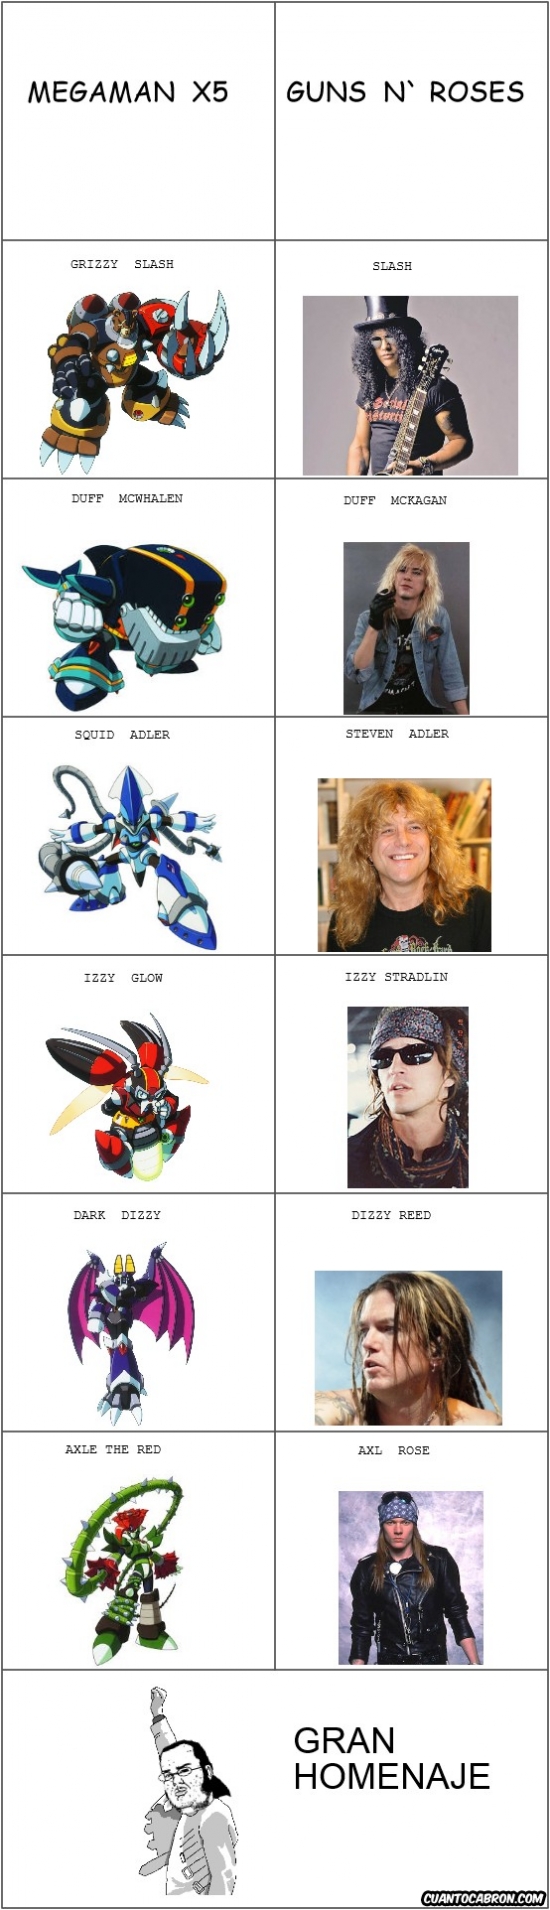 Friki - Algo me dice que había un fan de Guns n' Roses en el equipo del Megaman X5